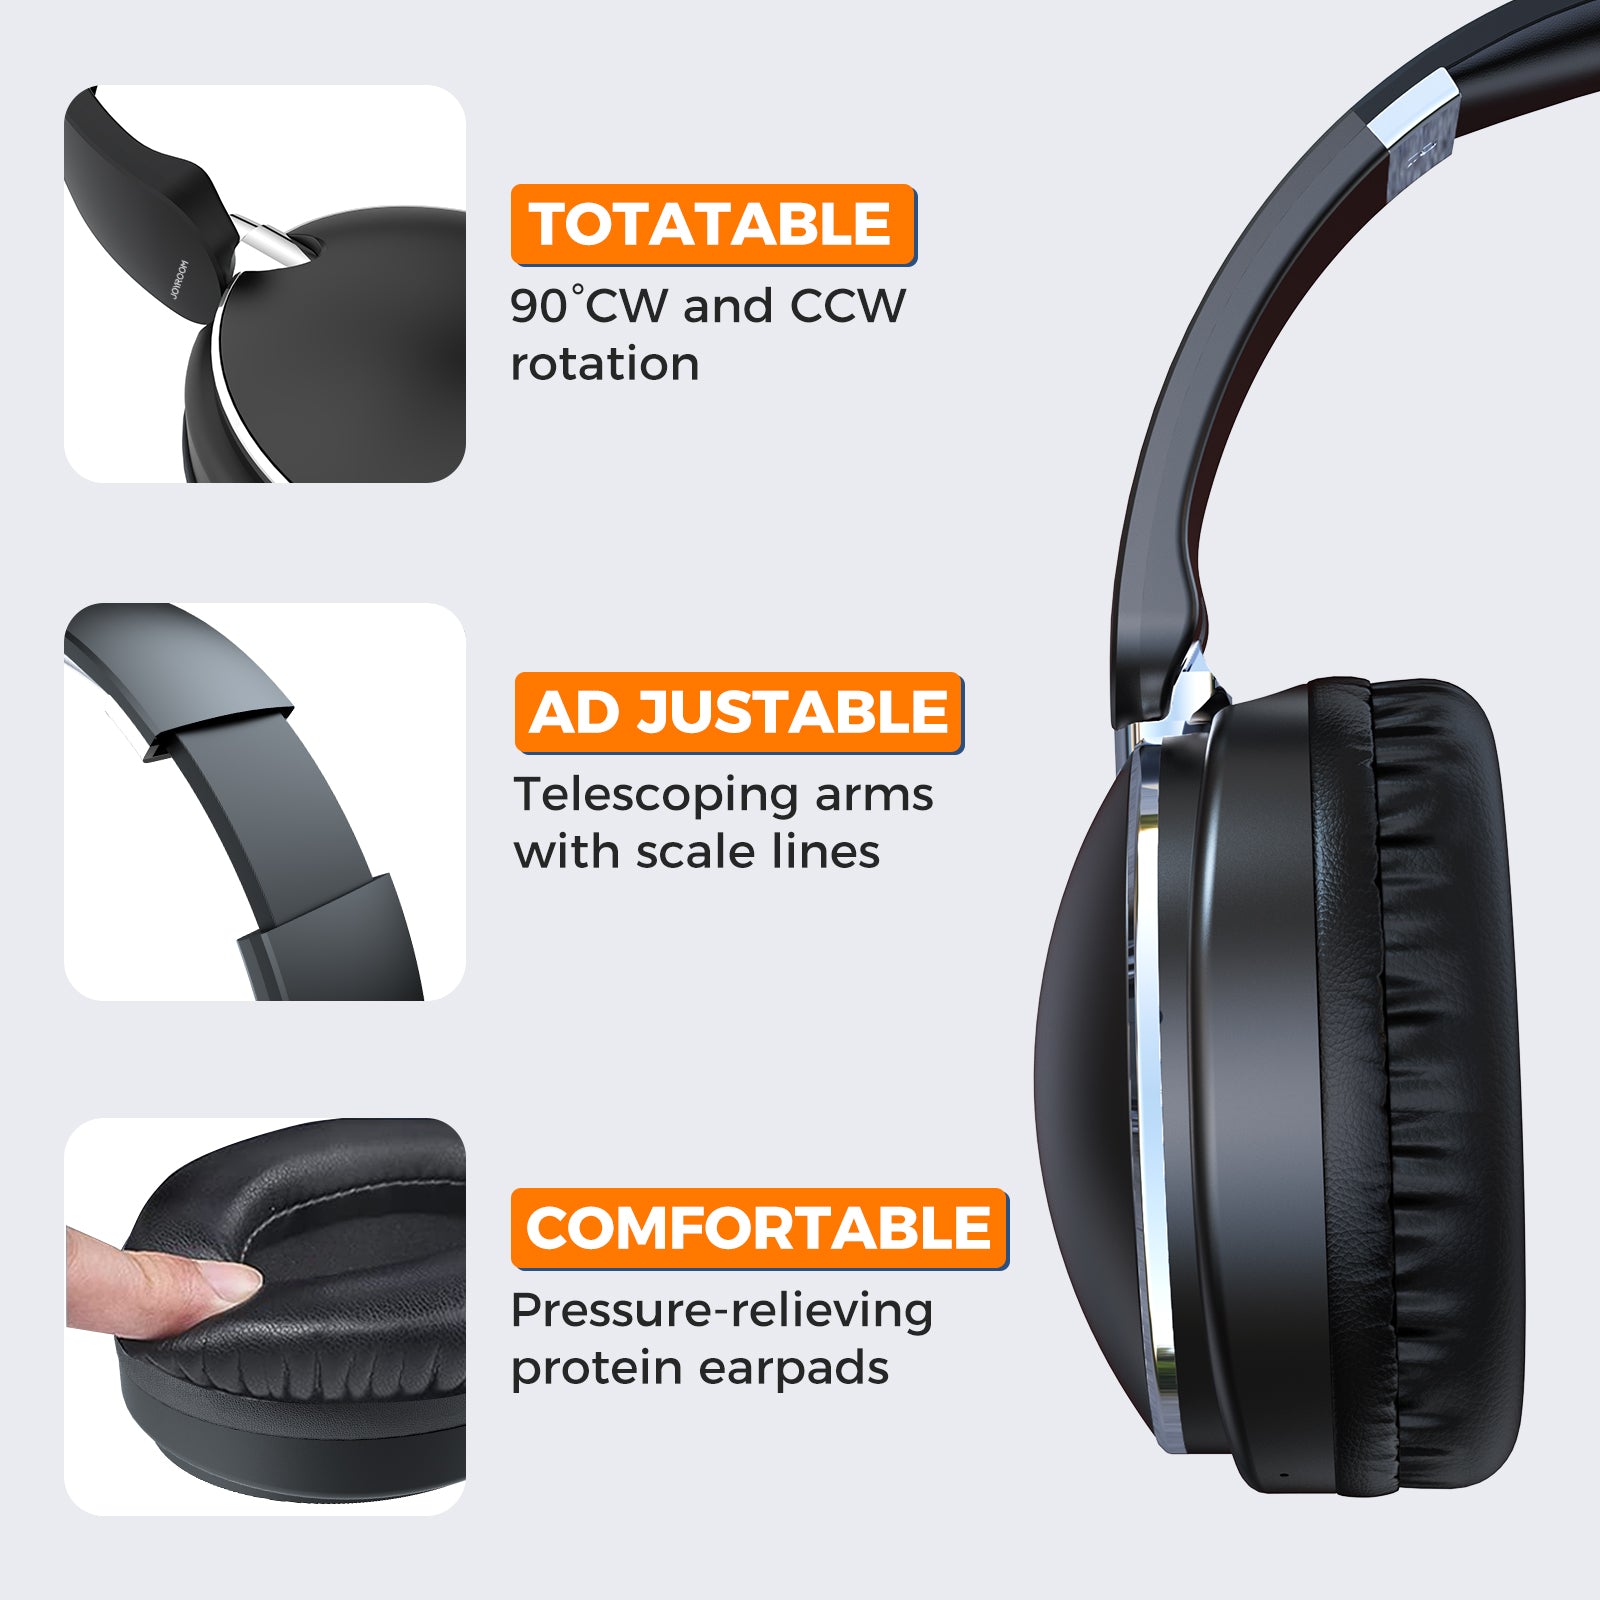 Buy Joyroom 40mm Wireless & Wired Foldable headphones in Jordan - Phonatech